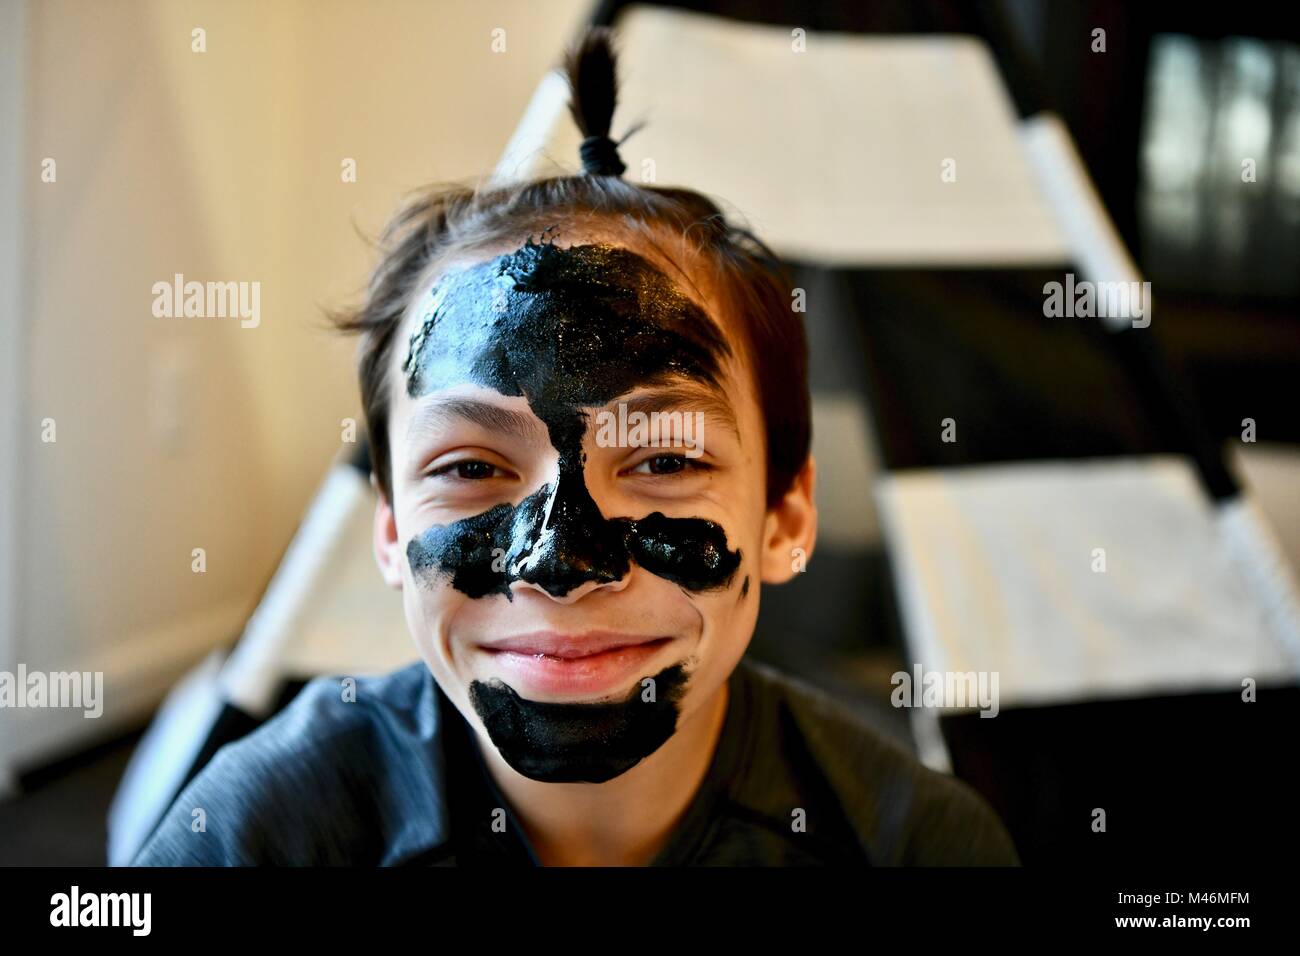 Teen boy wearing black facial cleansing mask Stock Photo